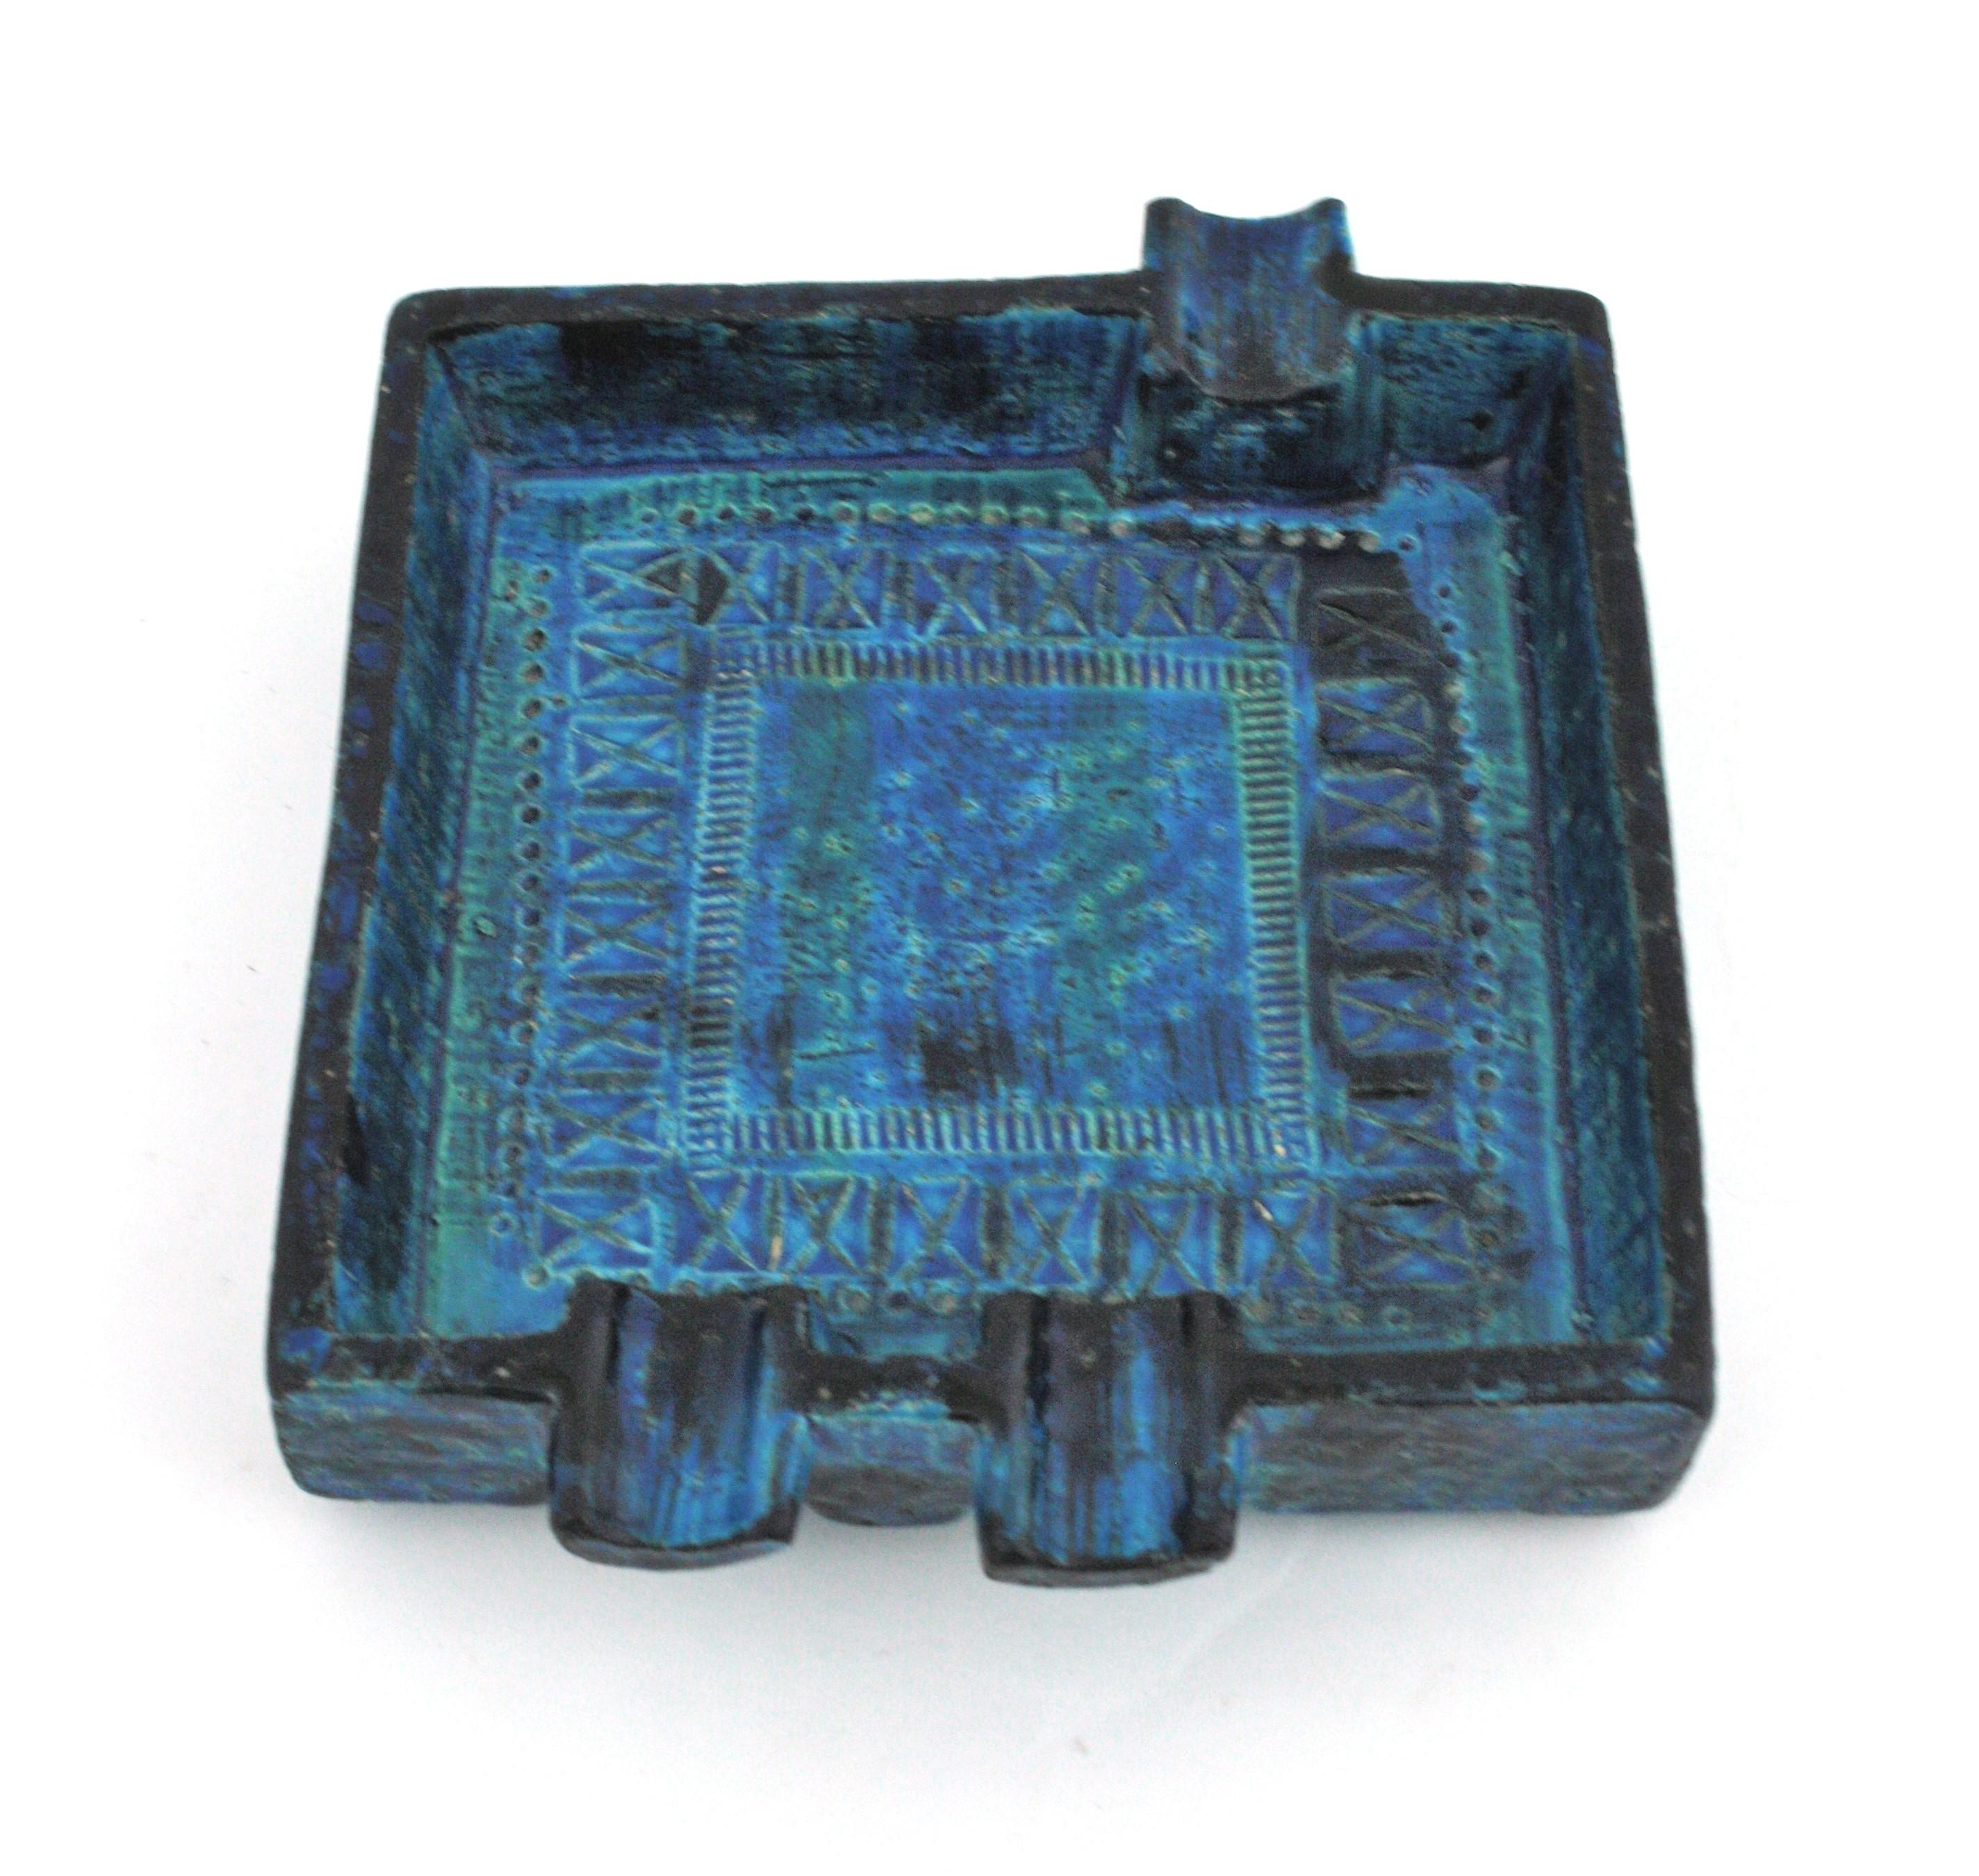 Aldo Londi Bitossi Rimini Blue Glazed Ceramic Large Square Ashtray In Good Condition For Sale In Barcelona, ES